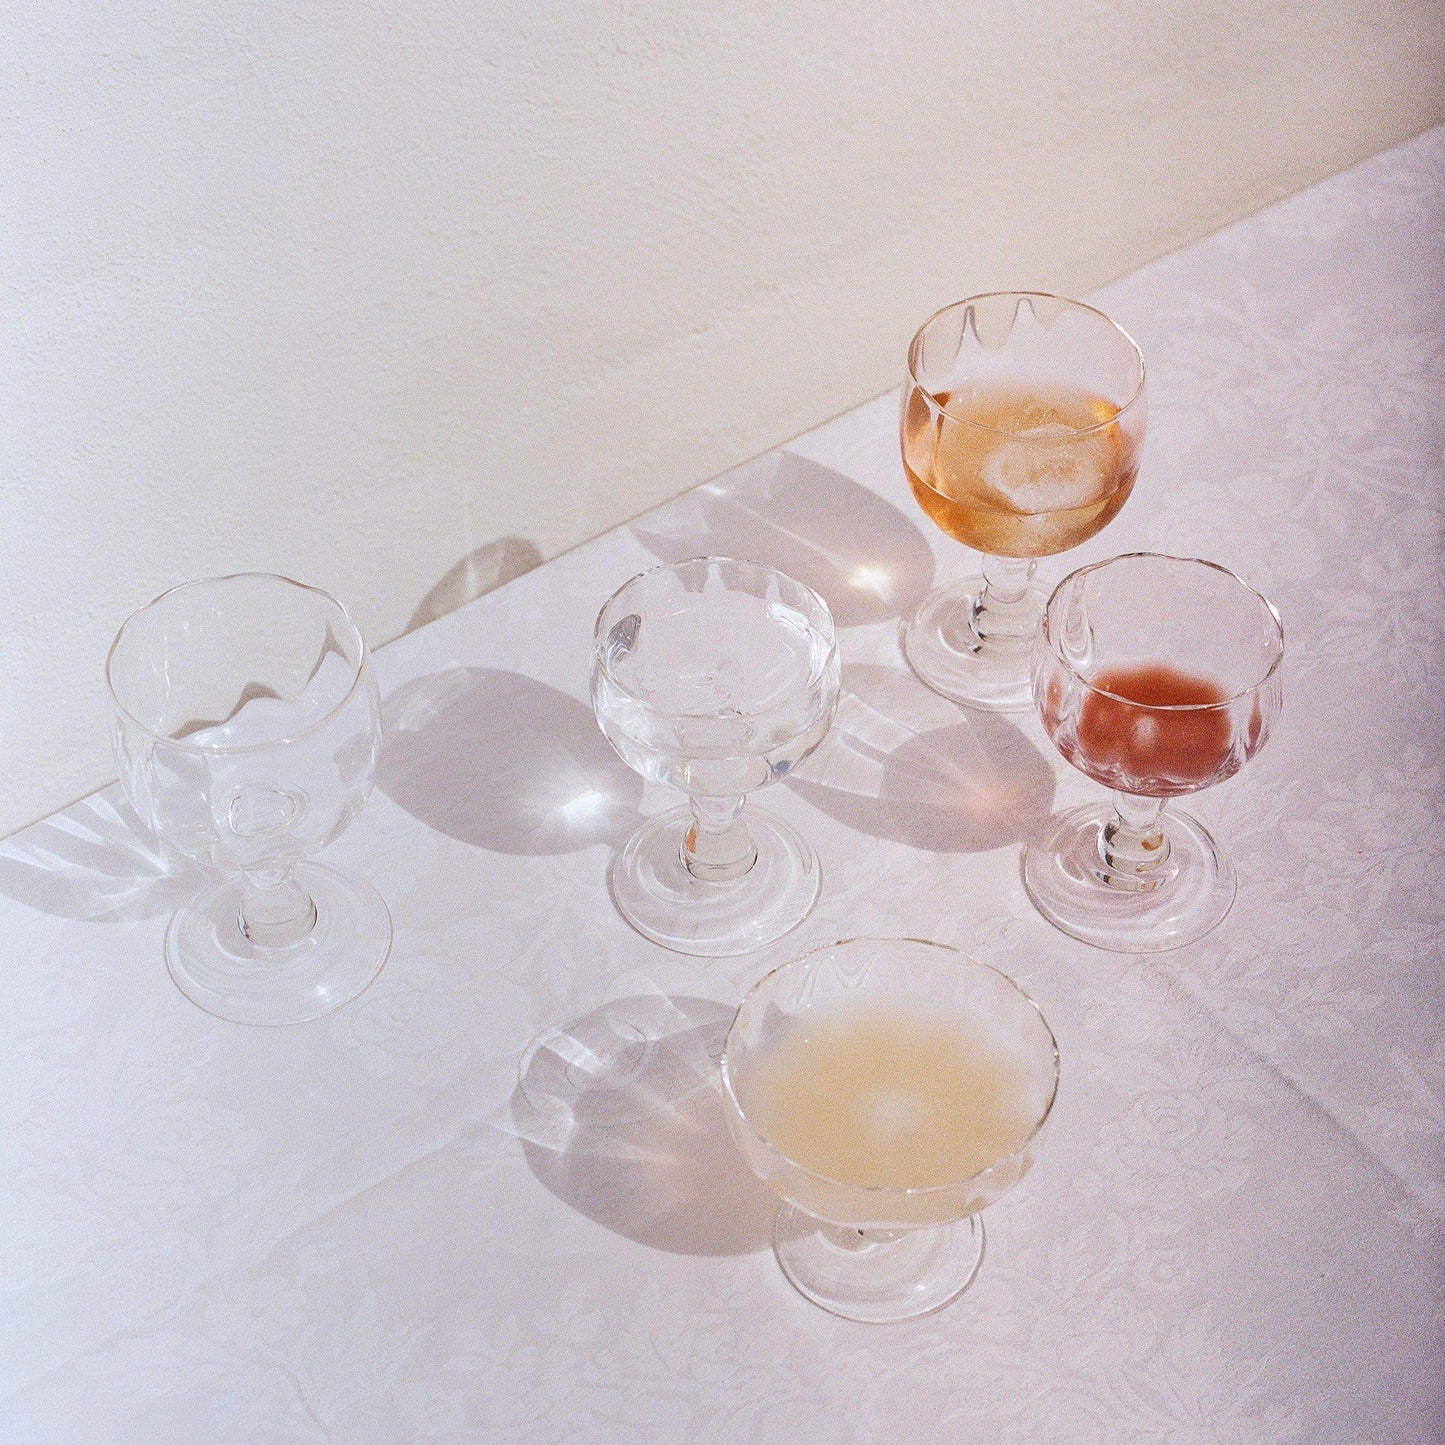 Alban Champagne Glass